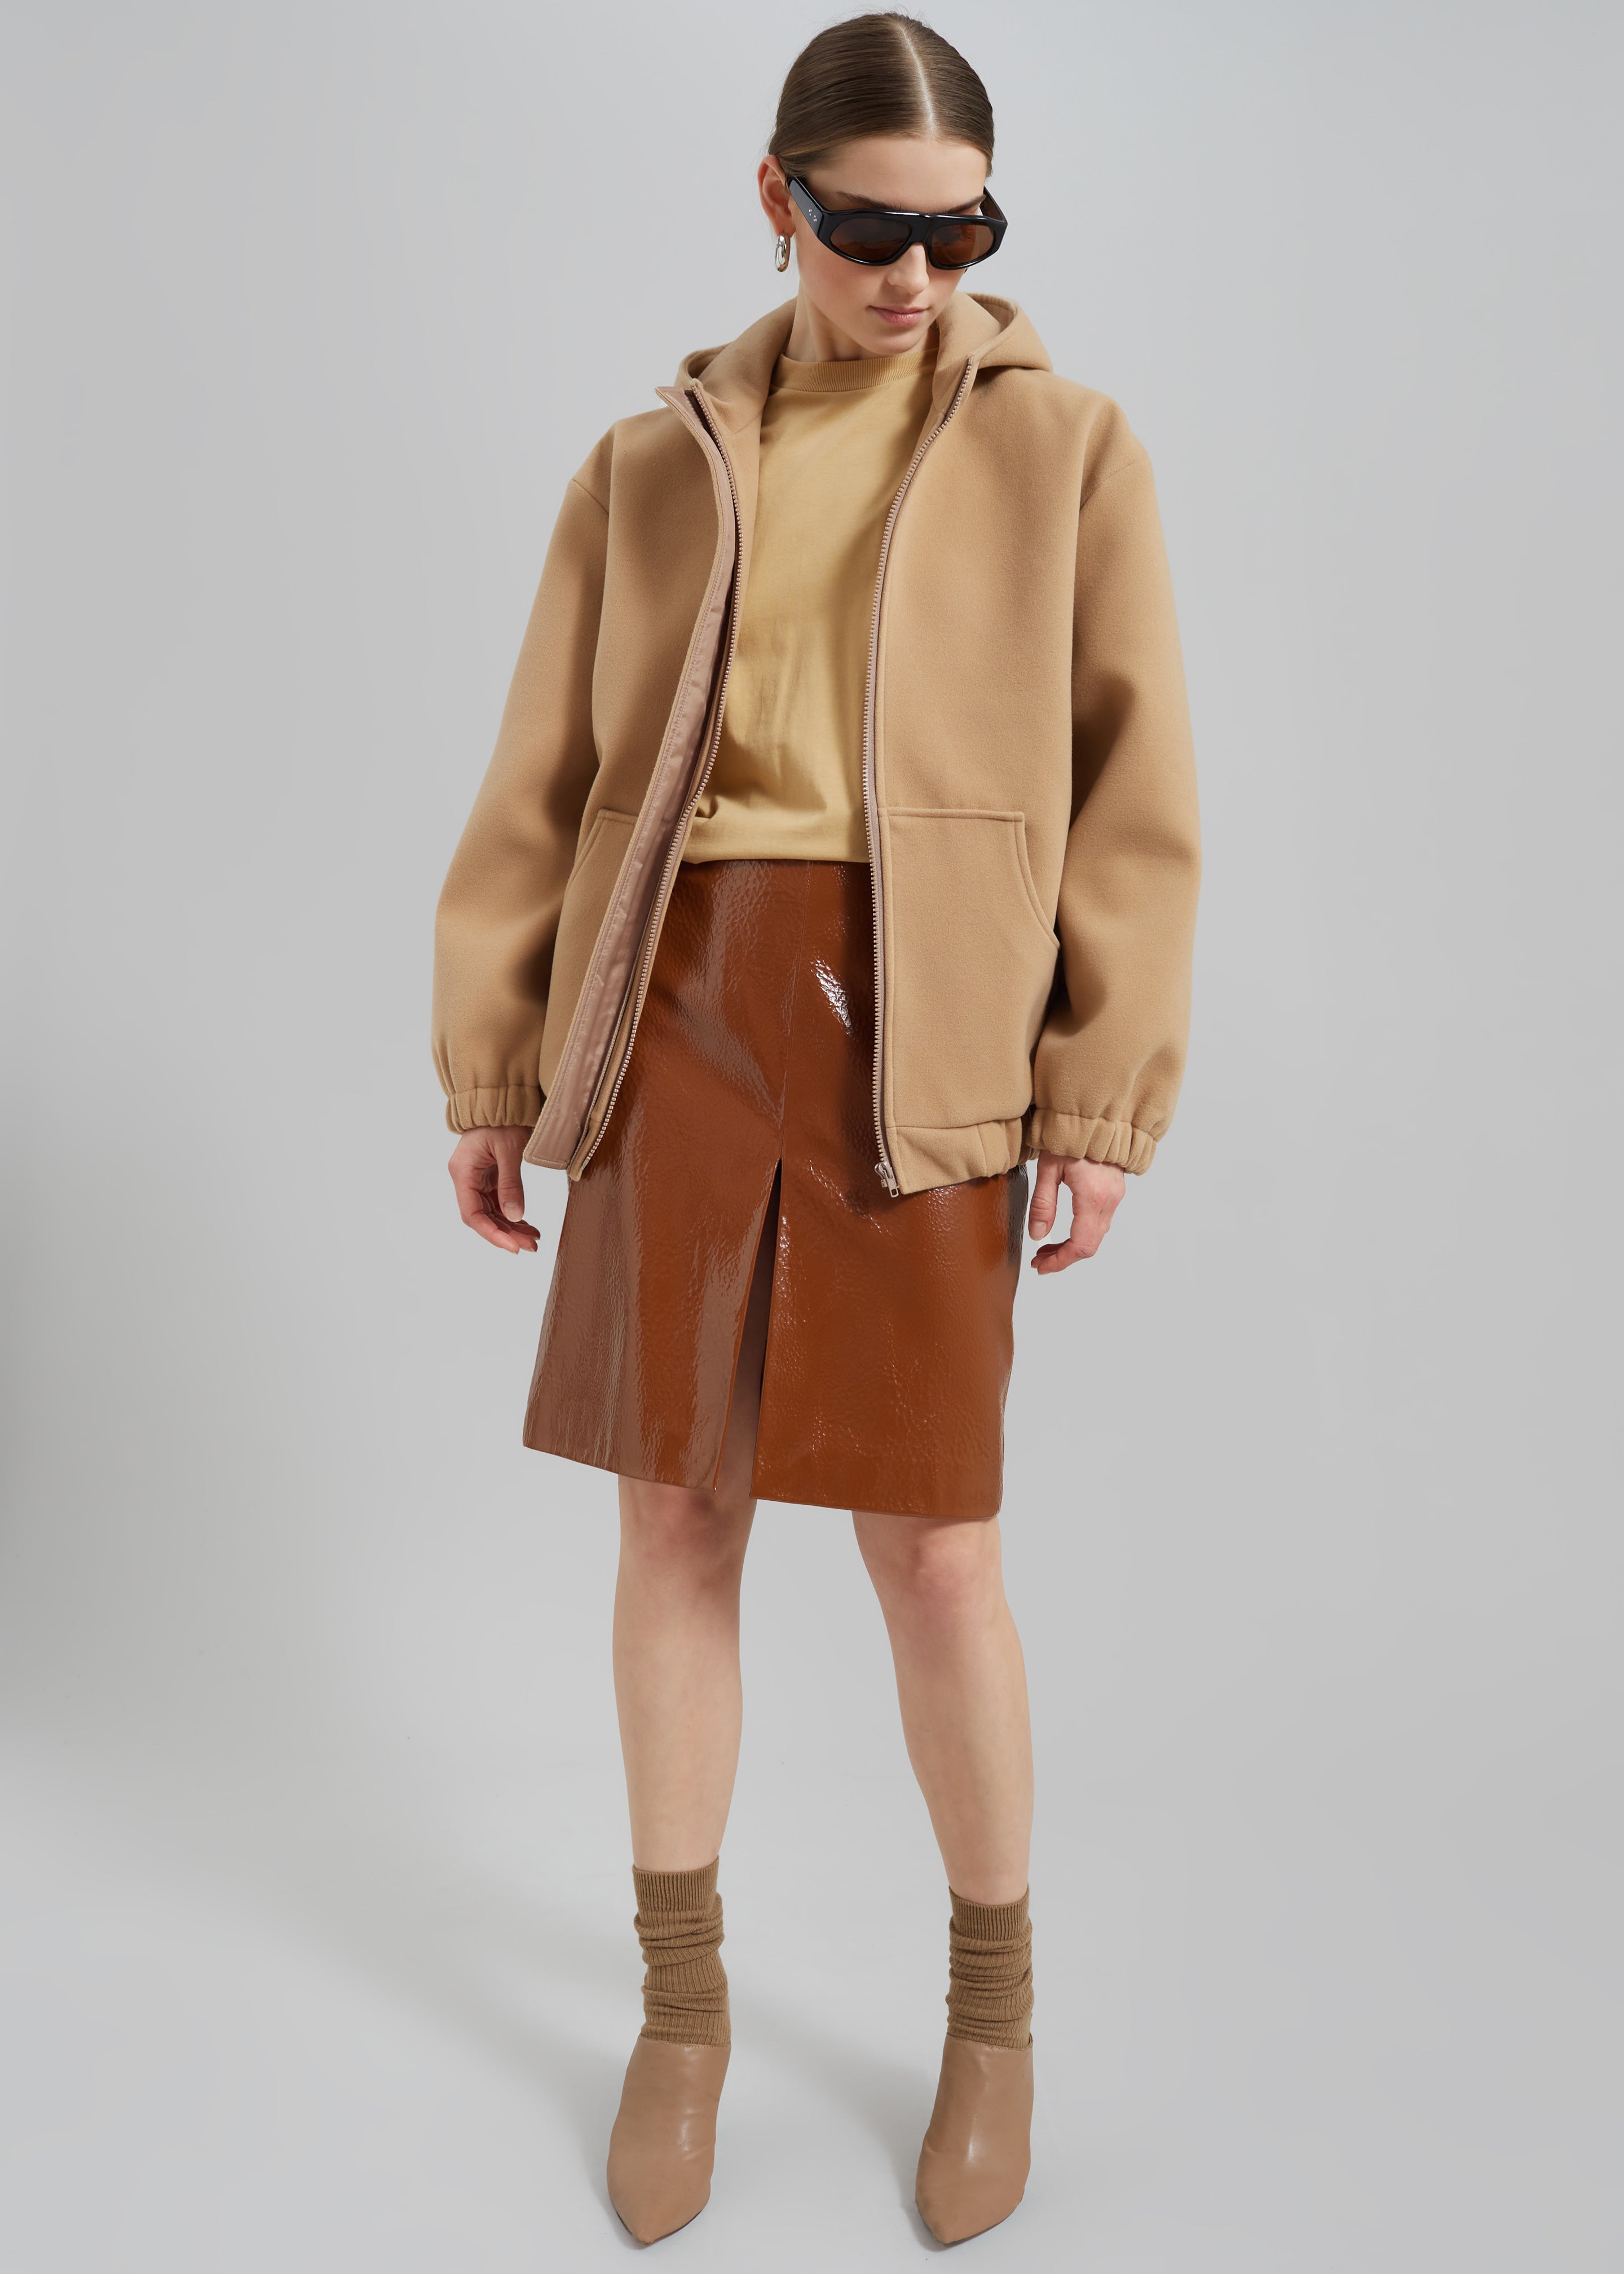 Britt Crackled Faux Leather Midi Skirt - Camel - 2